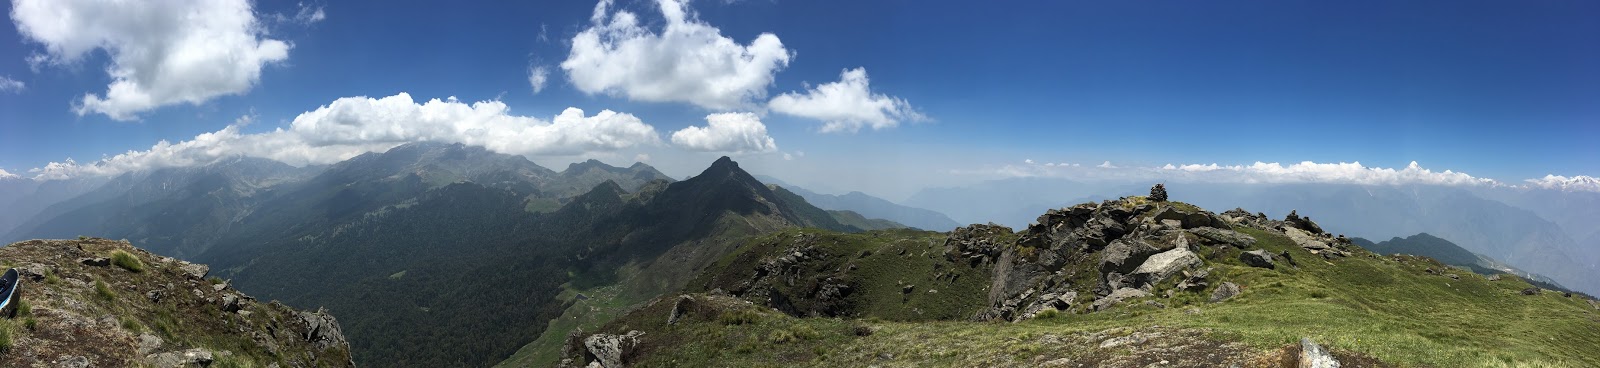 Panaromic View from the Gorsan Peak